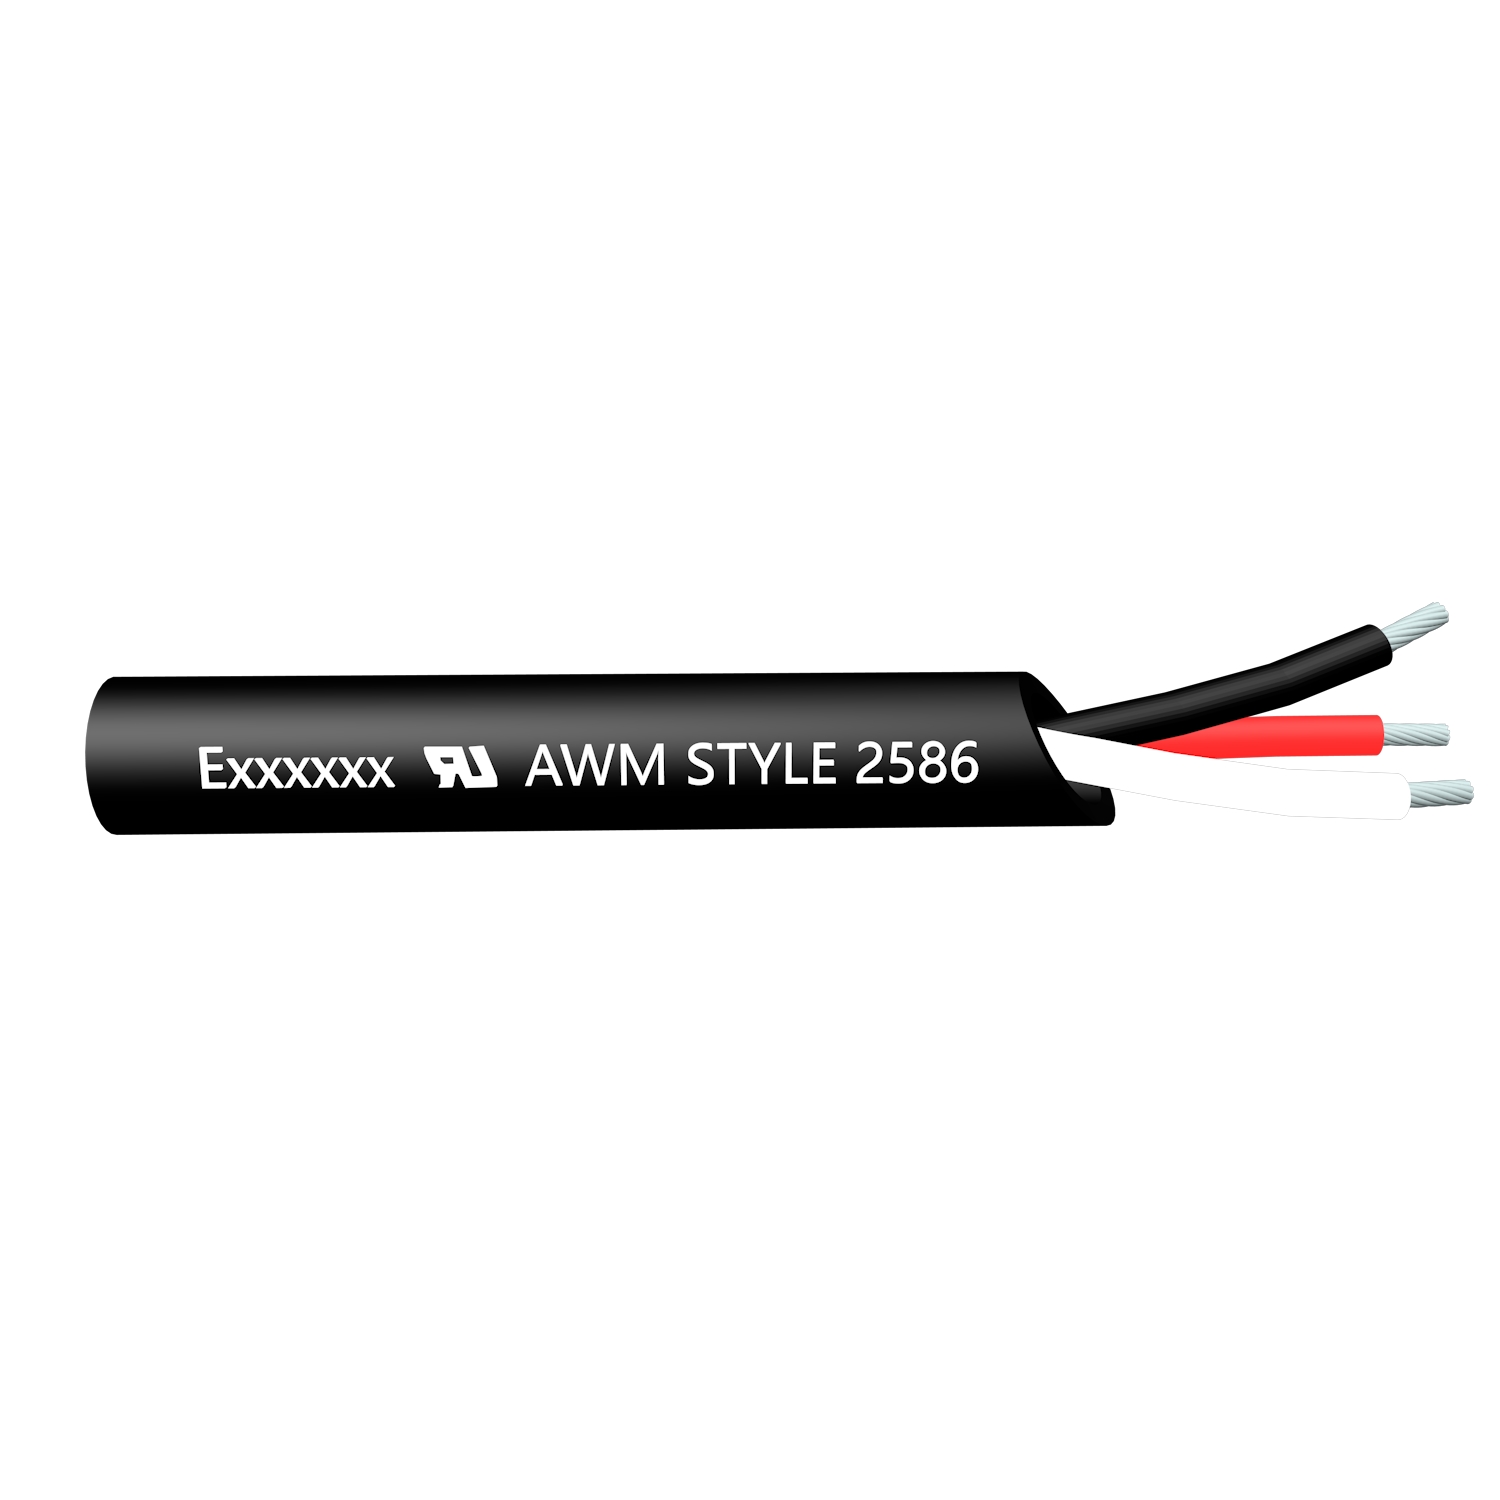 Cable de computadora UL2586 UL AWM PVC